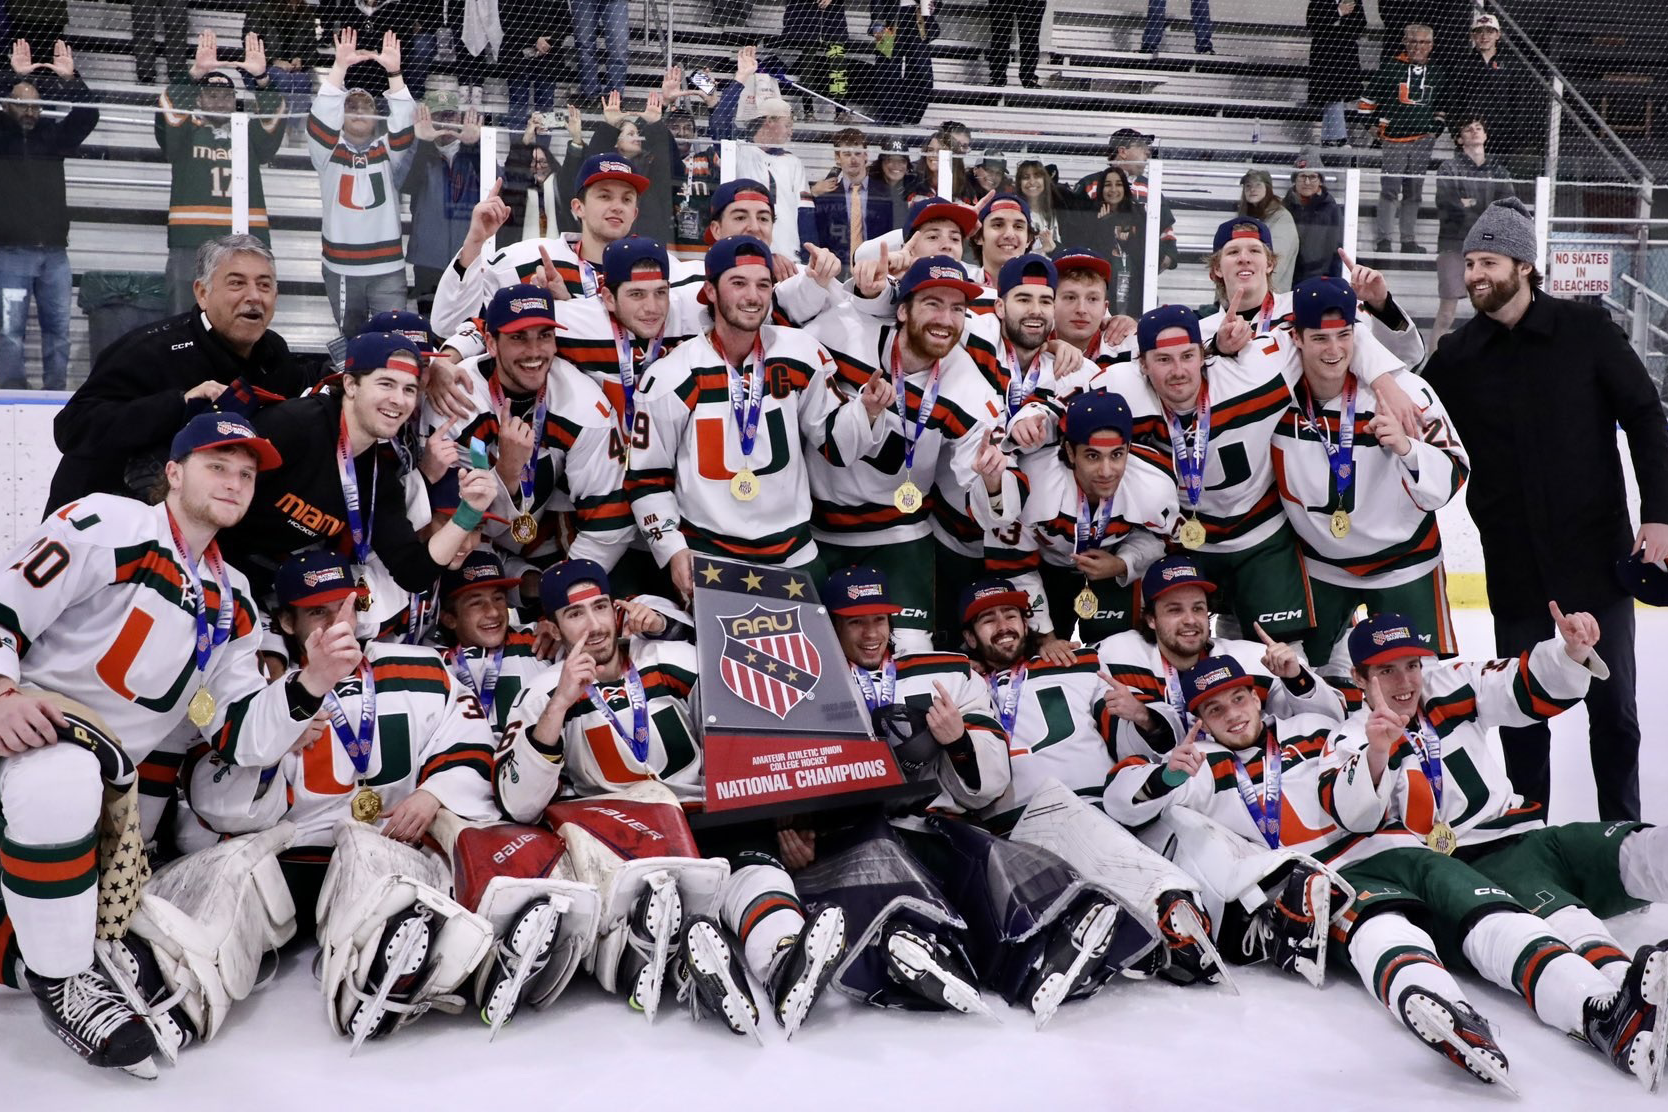 Men’s Ice Hockey Team are National Champions